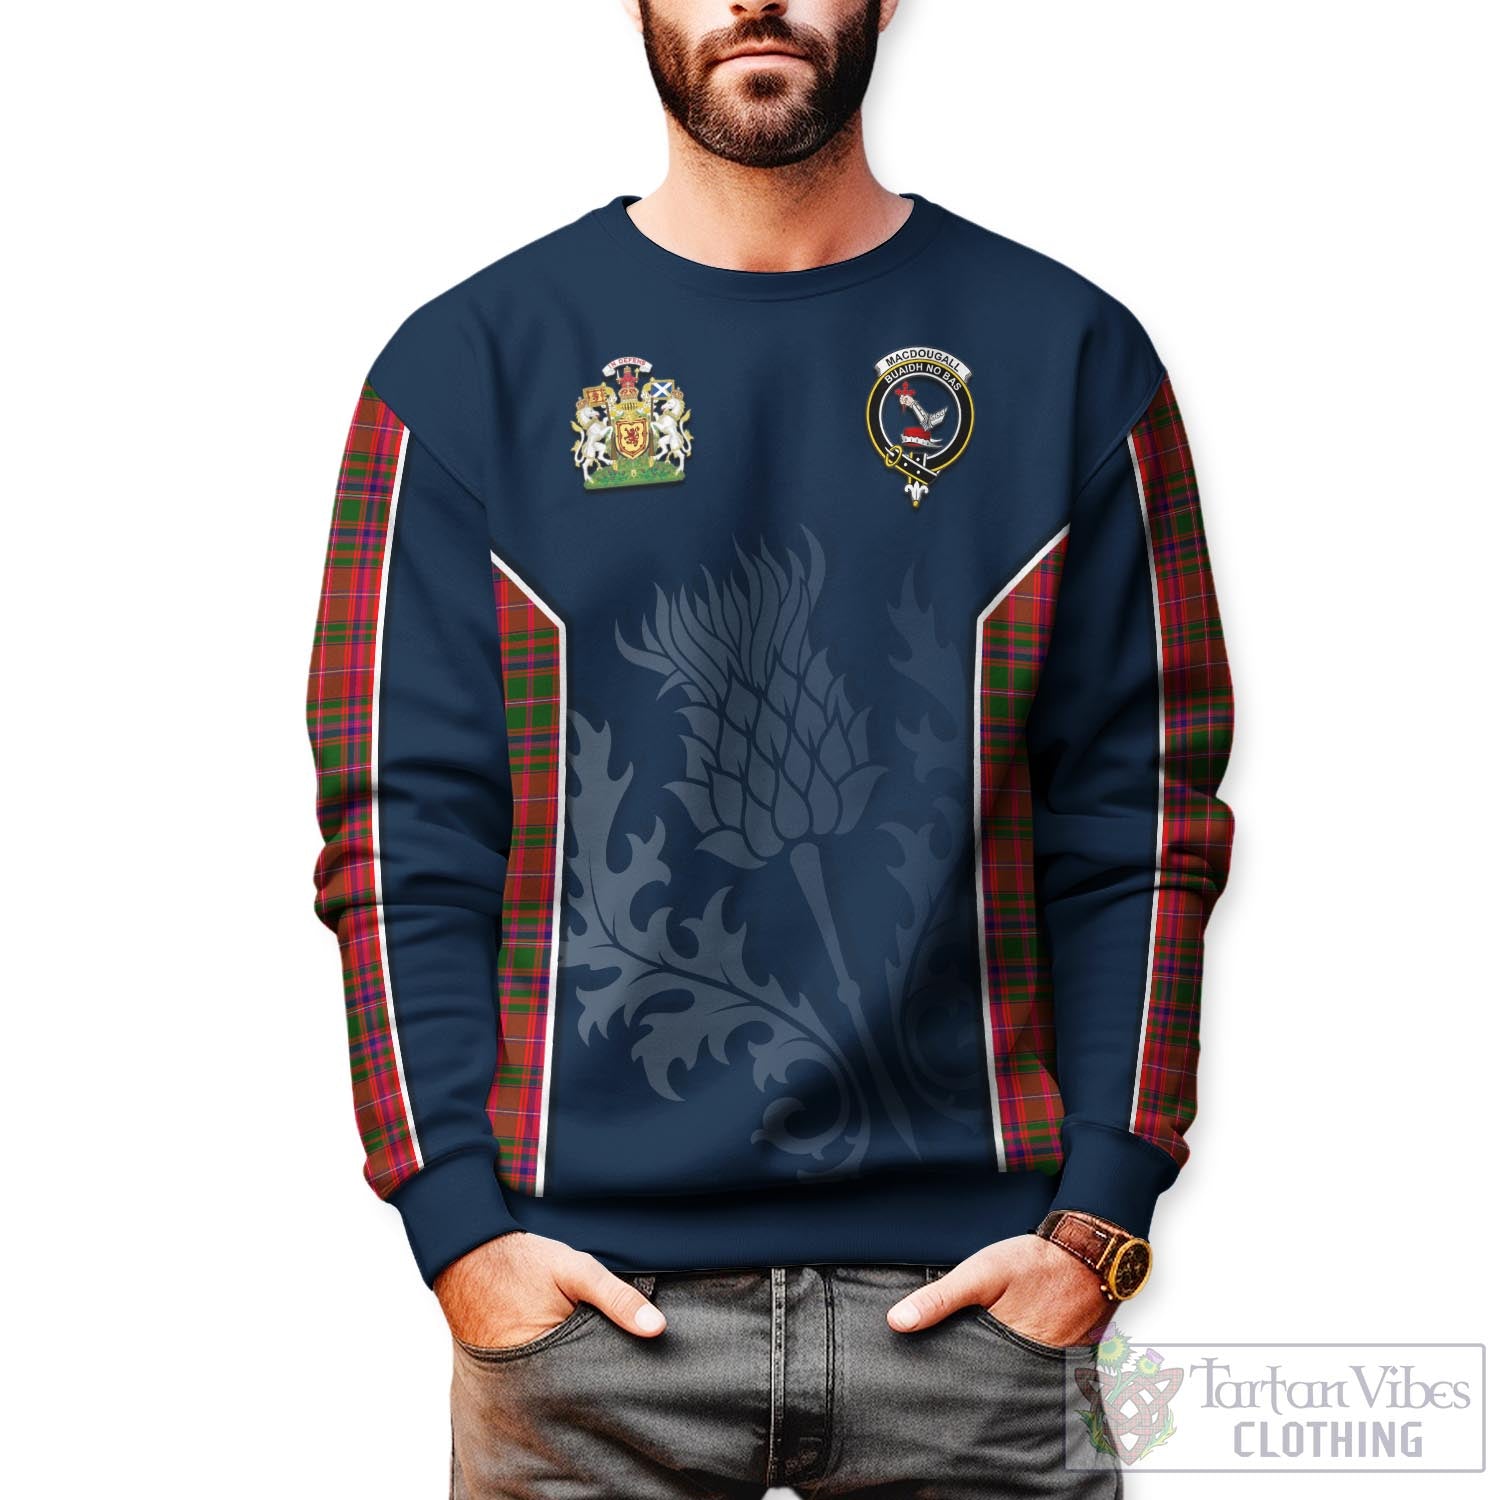 Tartan Vibes Clothing MacDougall Modern Tartan Sweatshirt with Family Crest and Scottish Thistle Vibes Sport Style